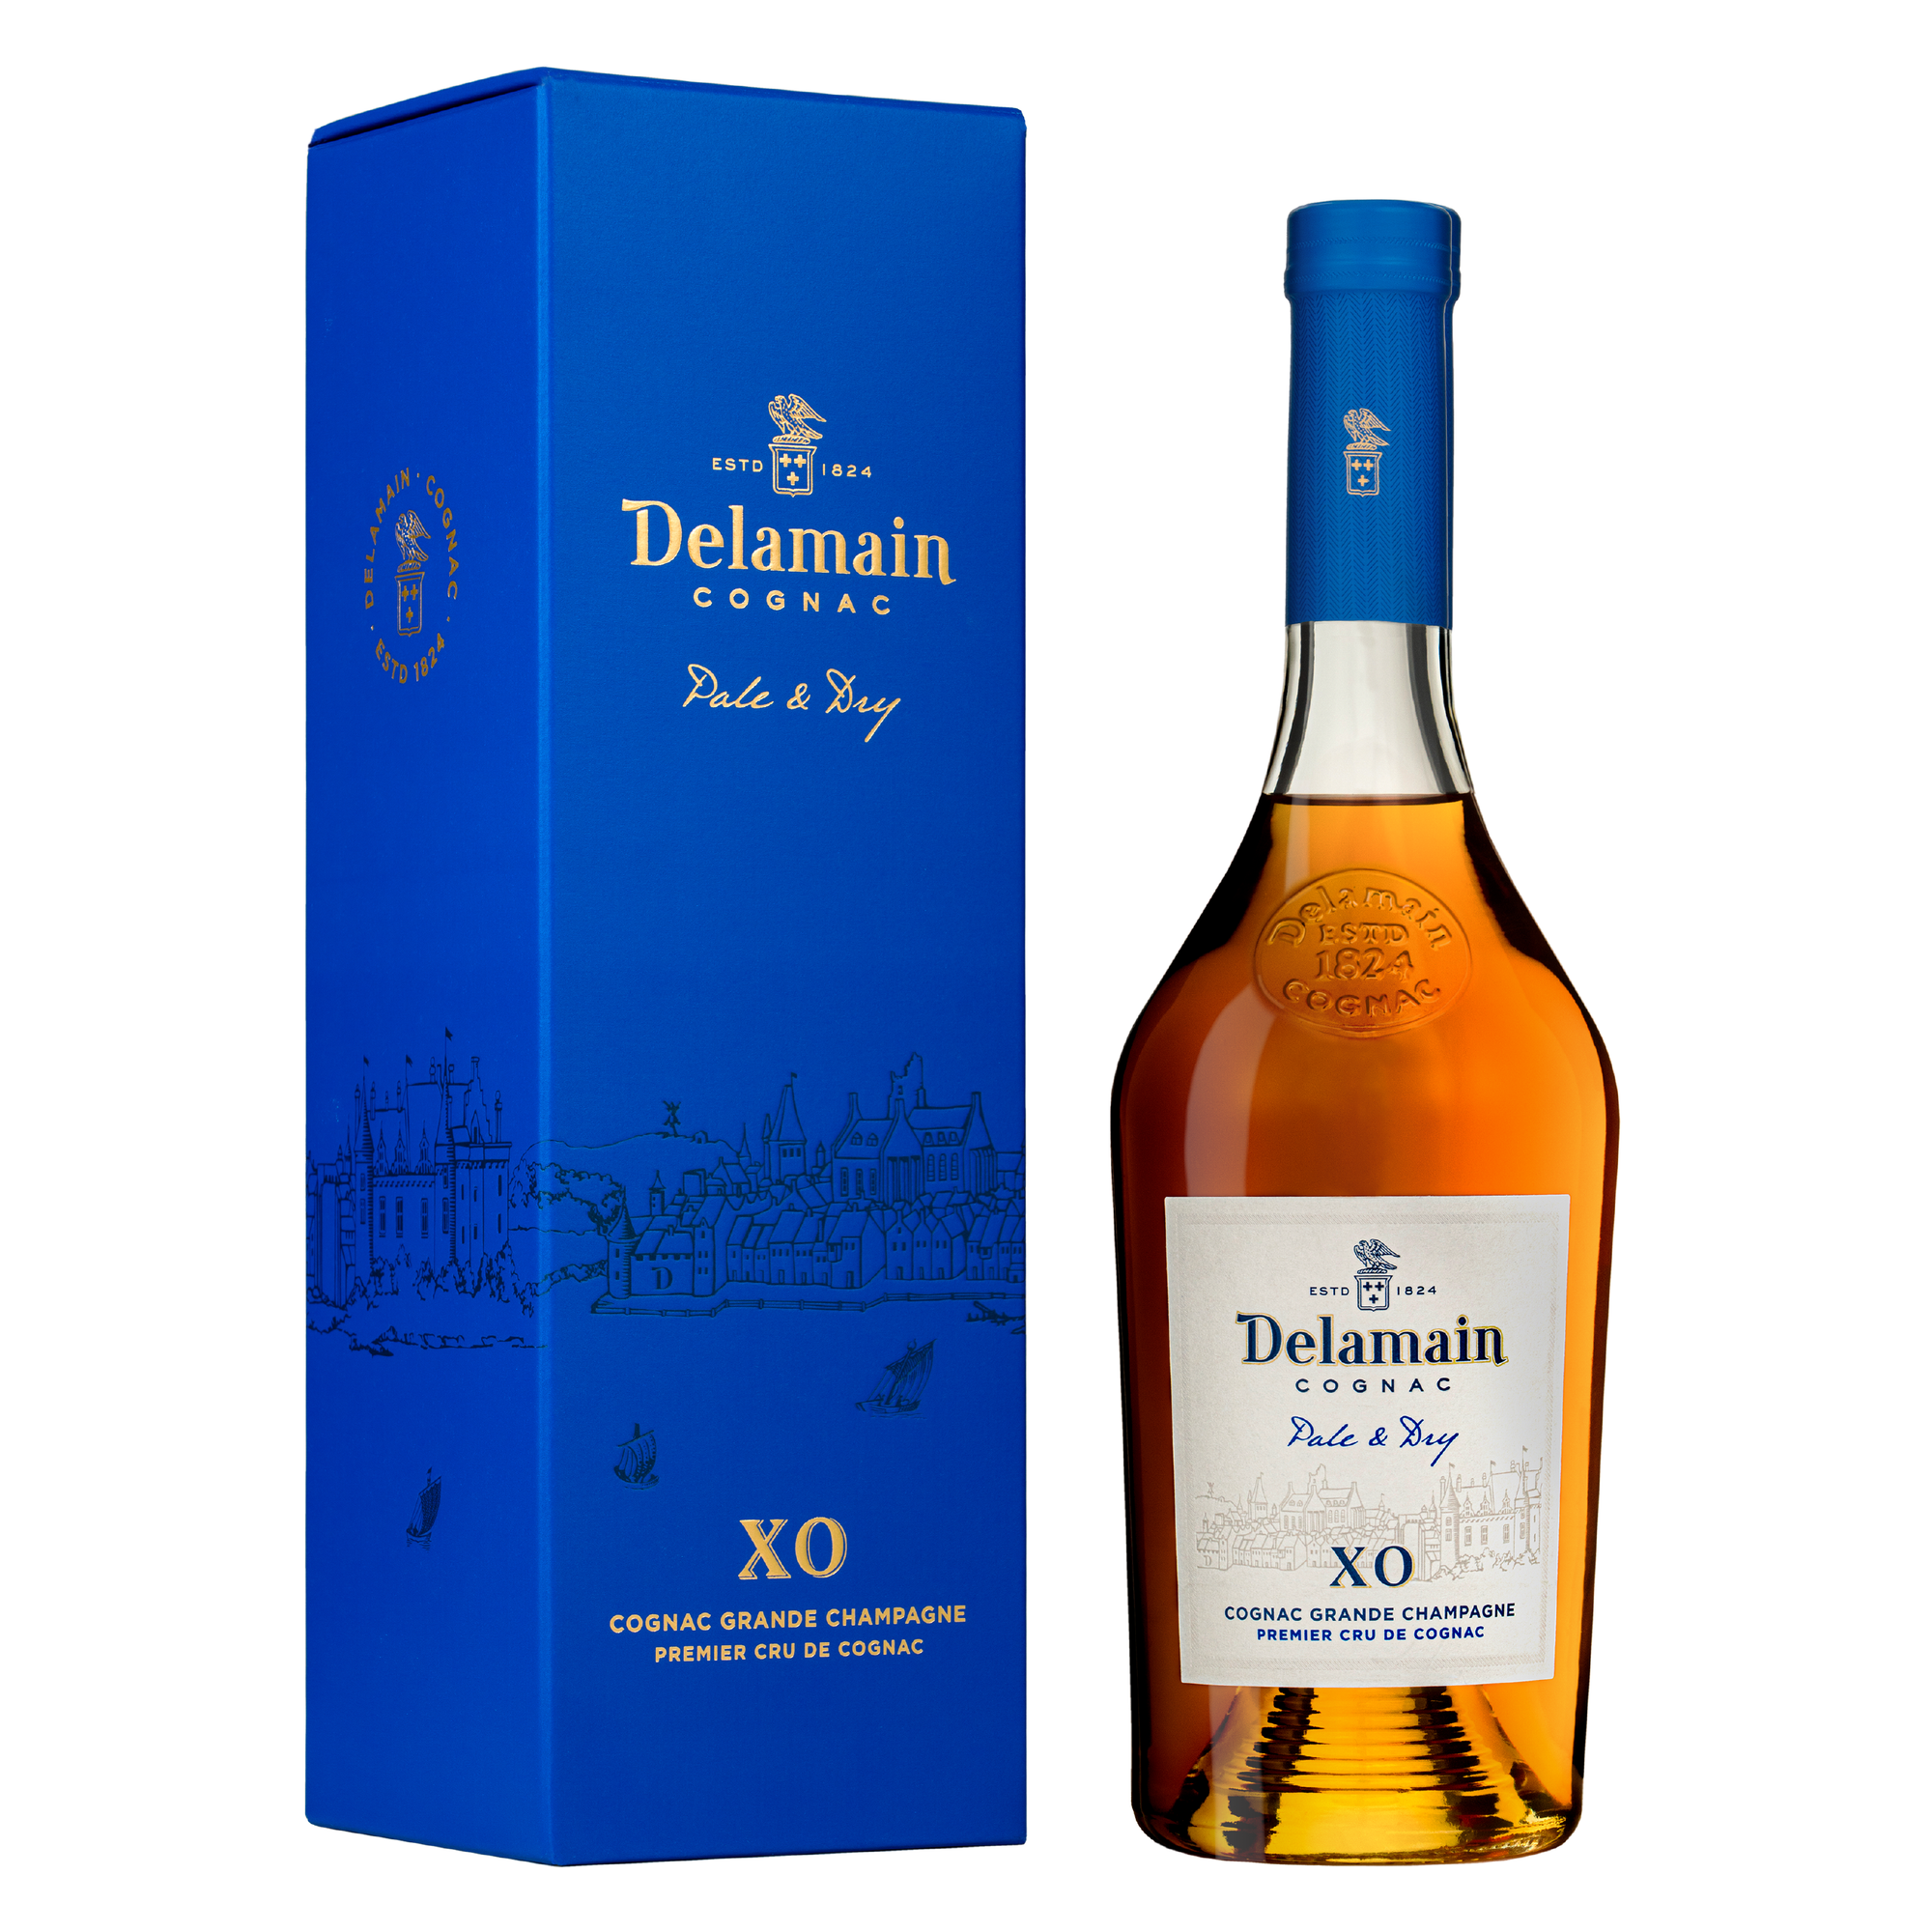 DELAMAIN Cognac "Pale & Dry XO" - 70cl with Gift Box